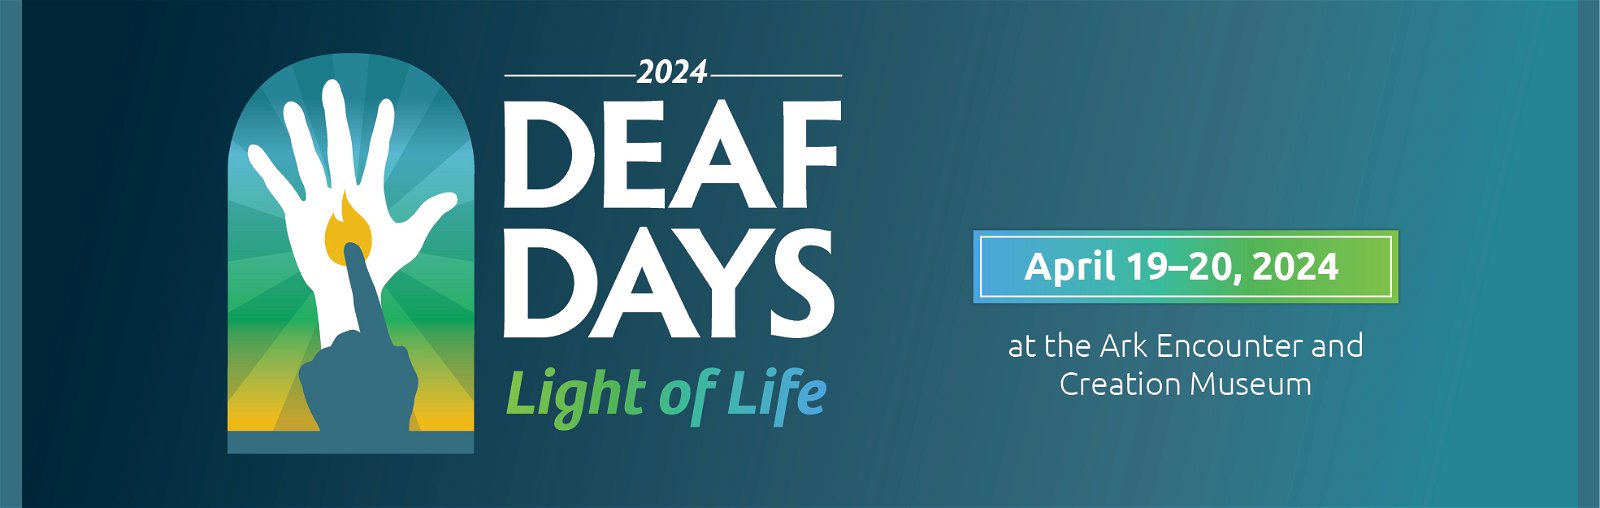 Deaf Days 2024